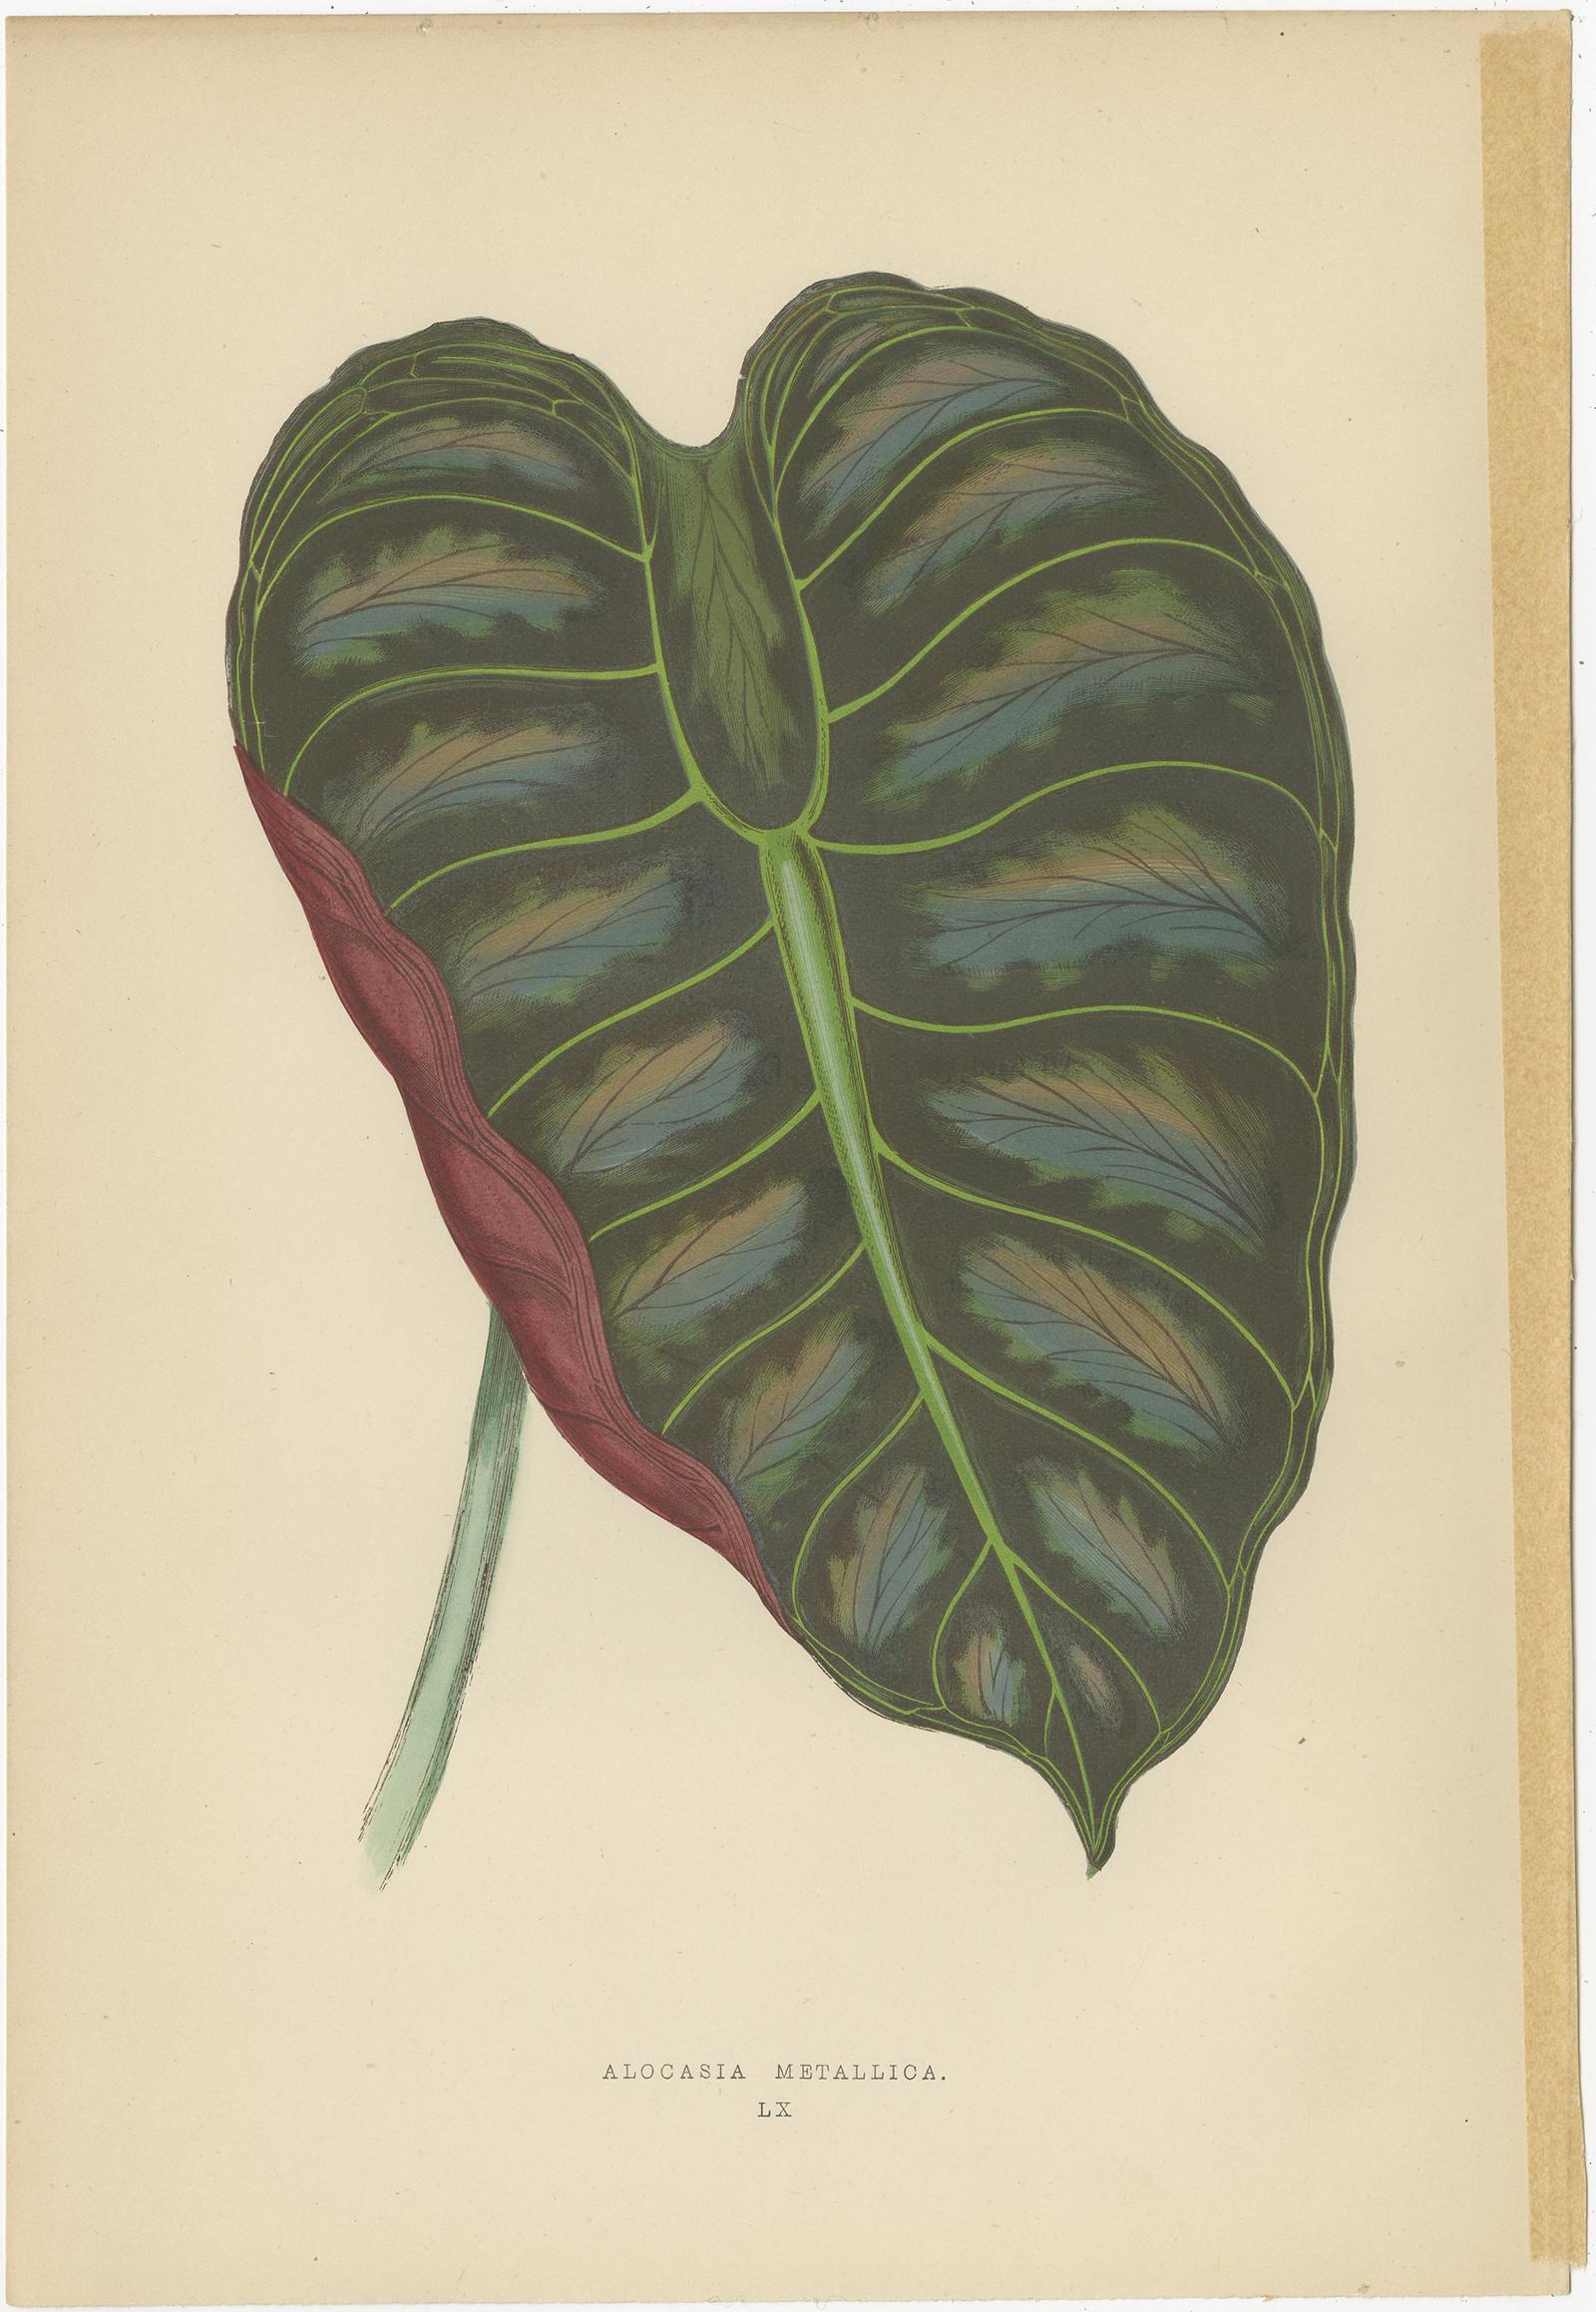 Set of 6 Botany Prints - Alocasia Metallica - Echites Nutans (1891) For Sale 2